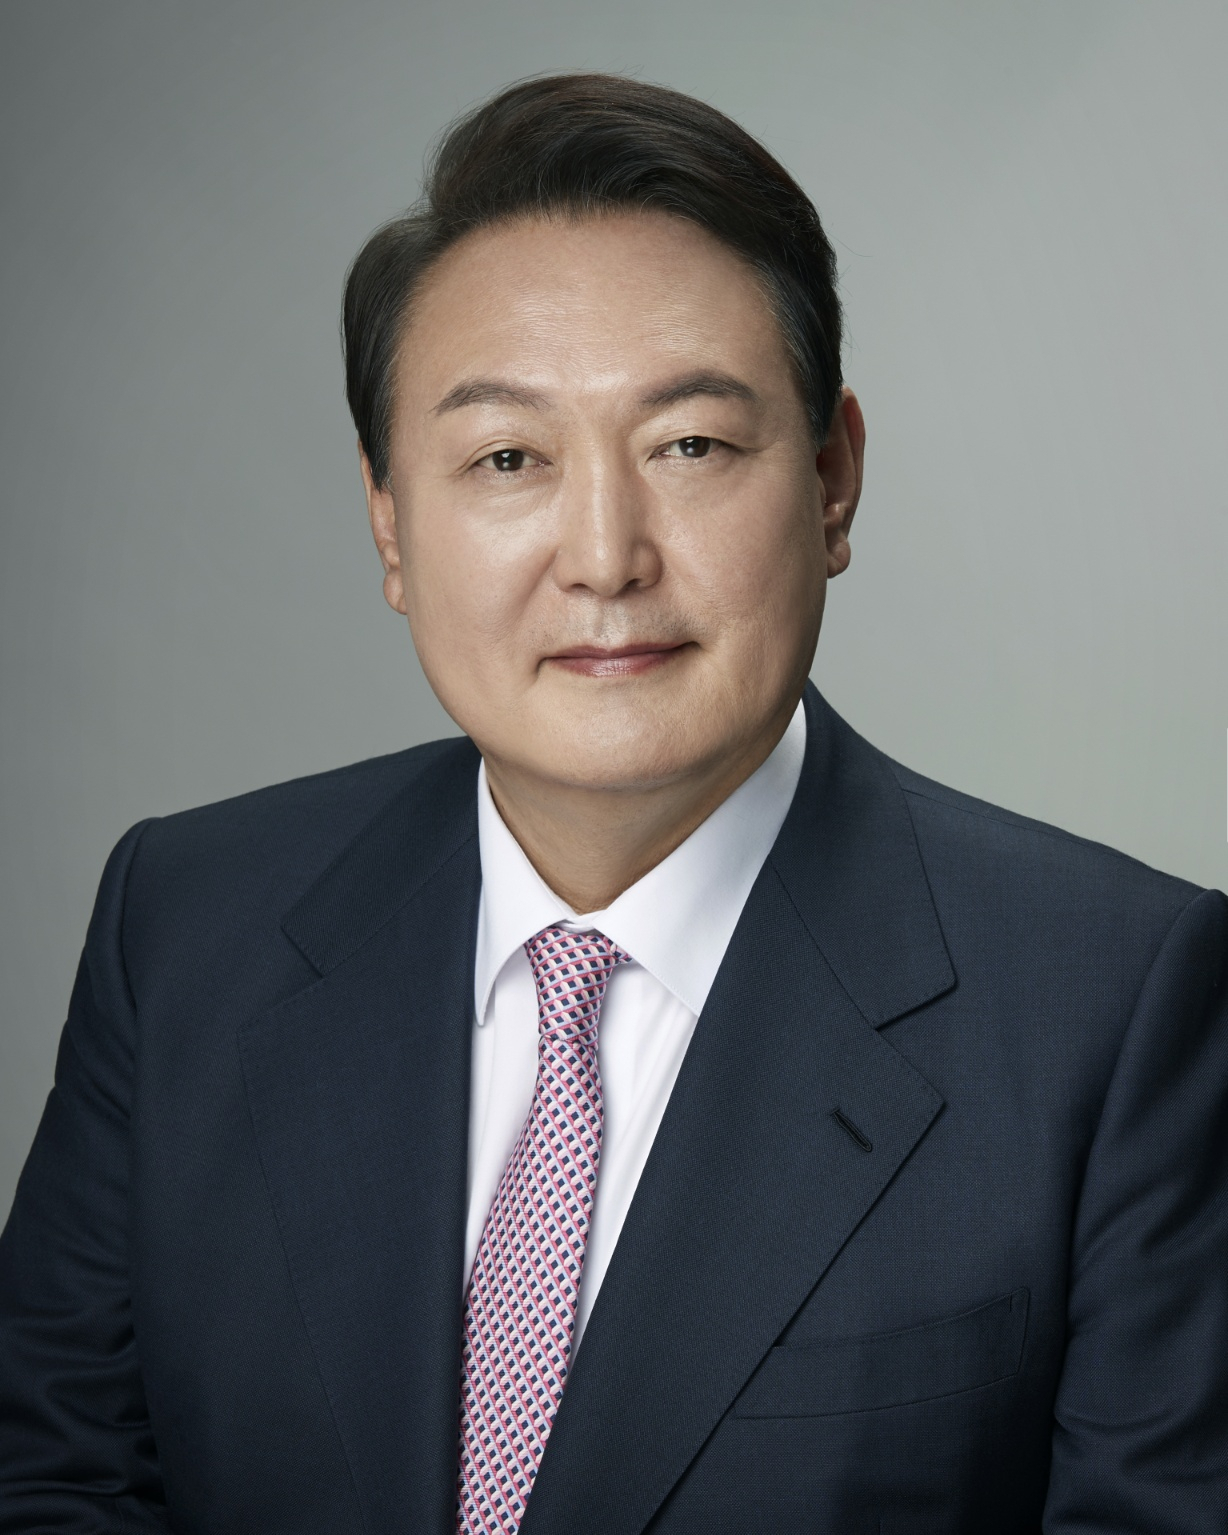 Yoon Suk Yeol, President of the Republic of Korea